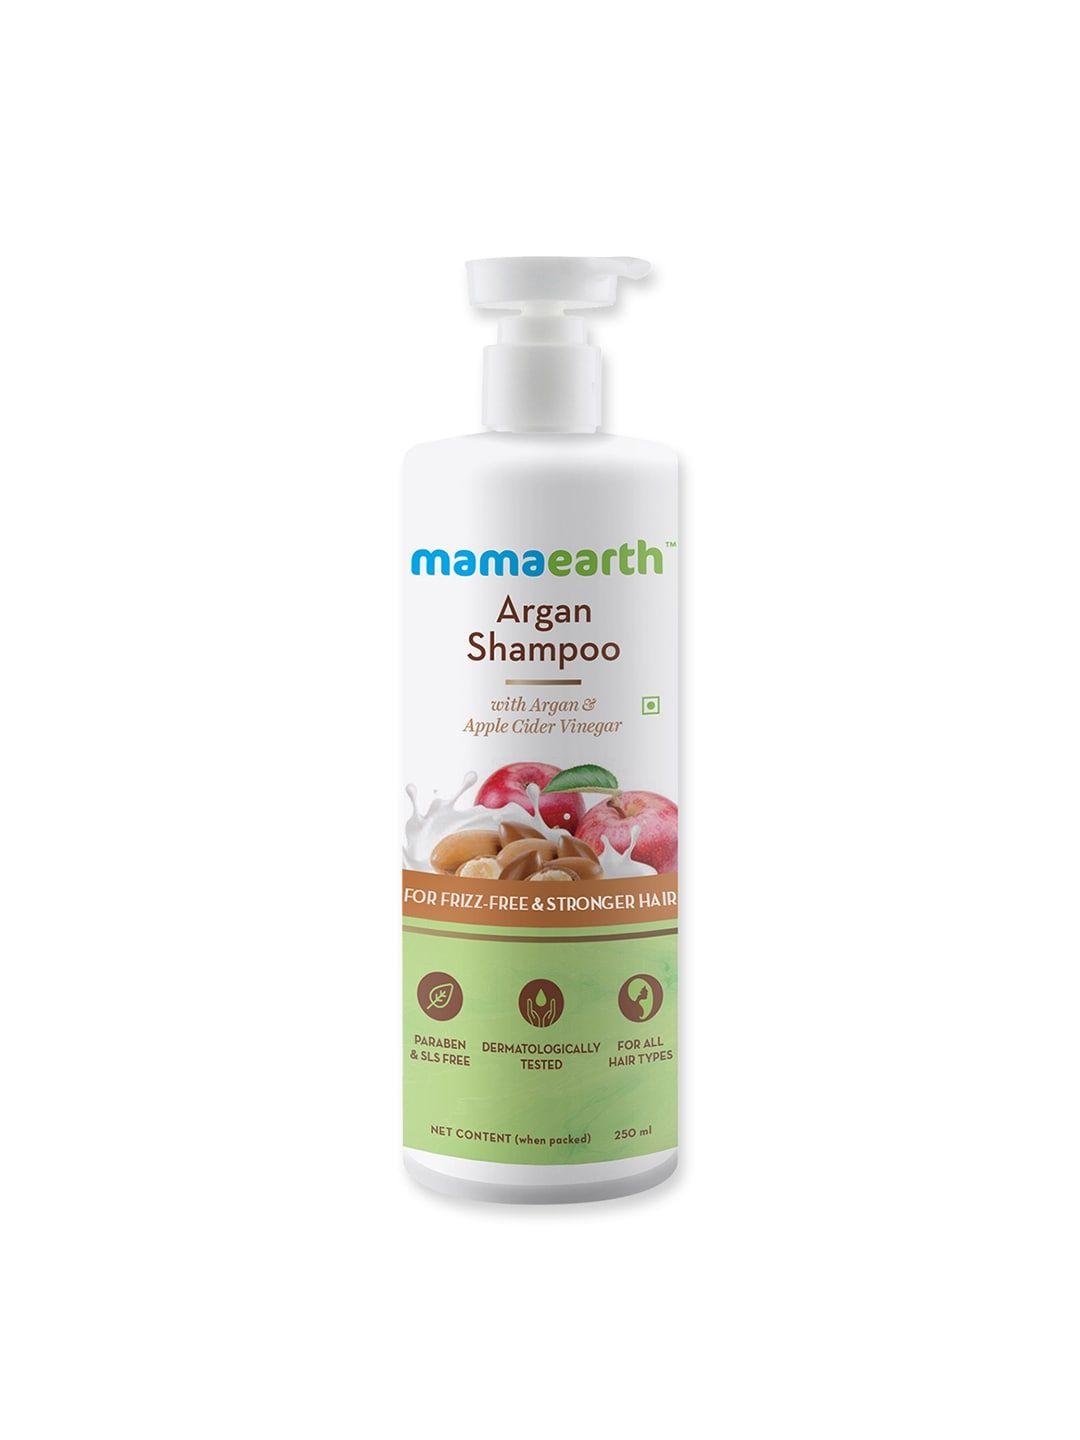 mamaearth argan & apple cider vinegar sustainable shampoo - frizz free & strong hair 250ml